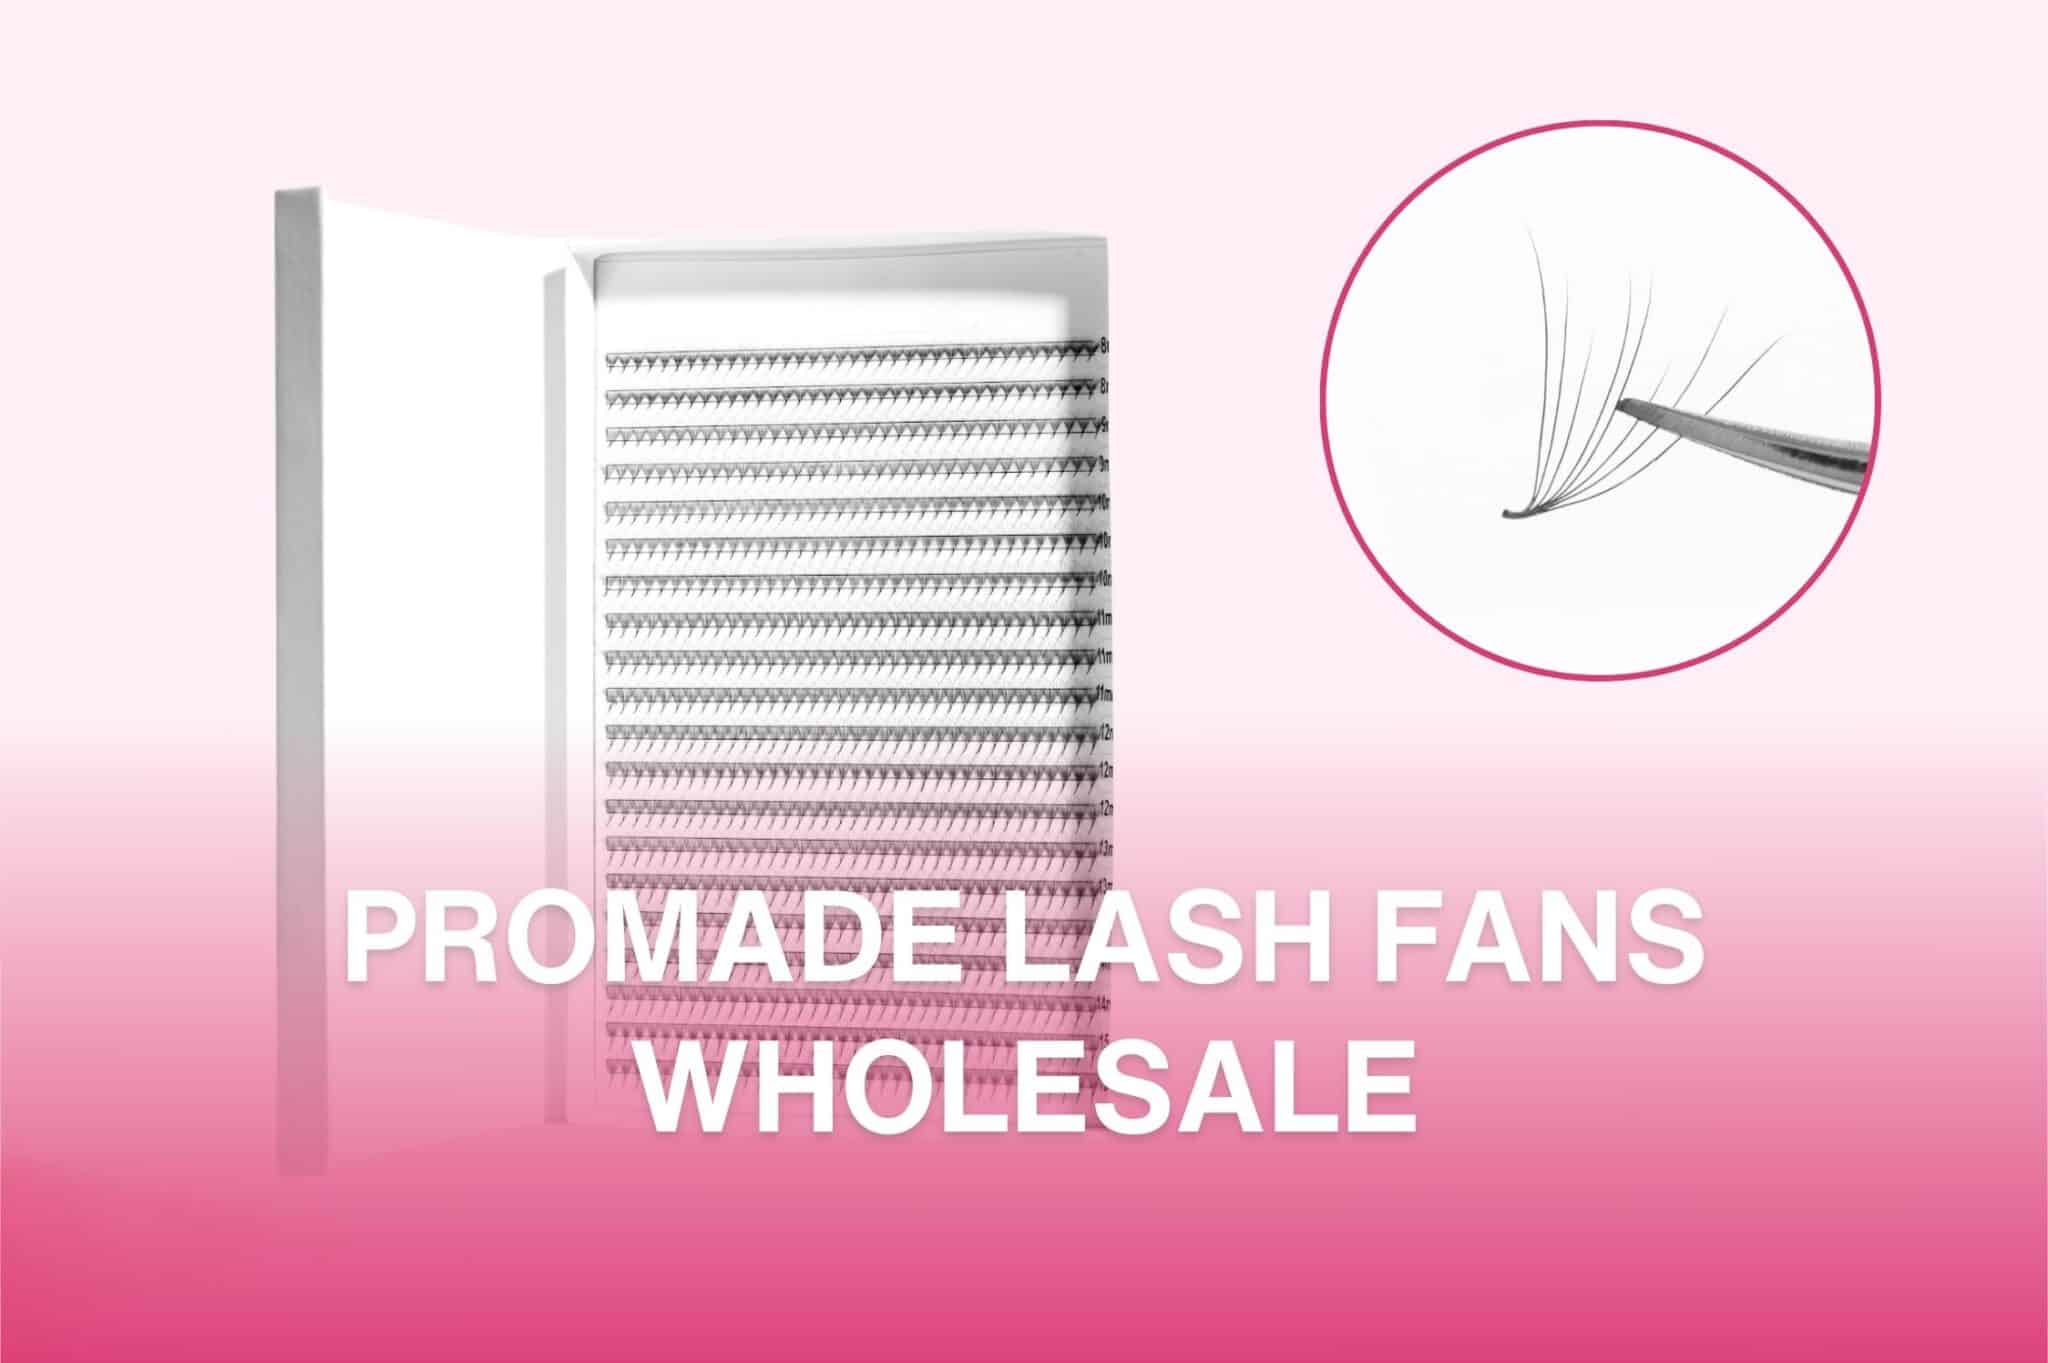 Promade Lash Fans Wholesale tag